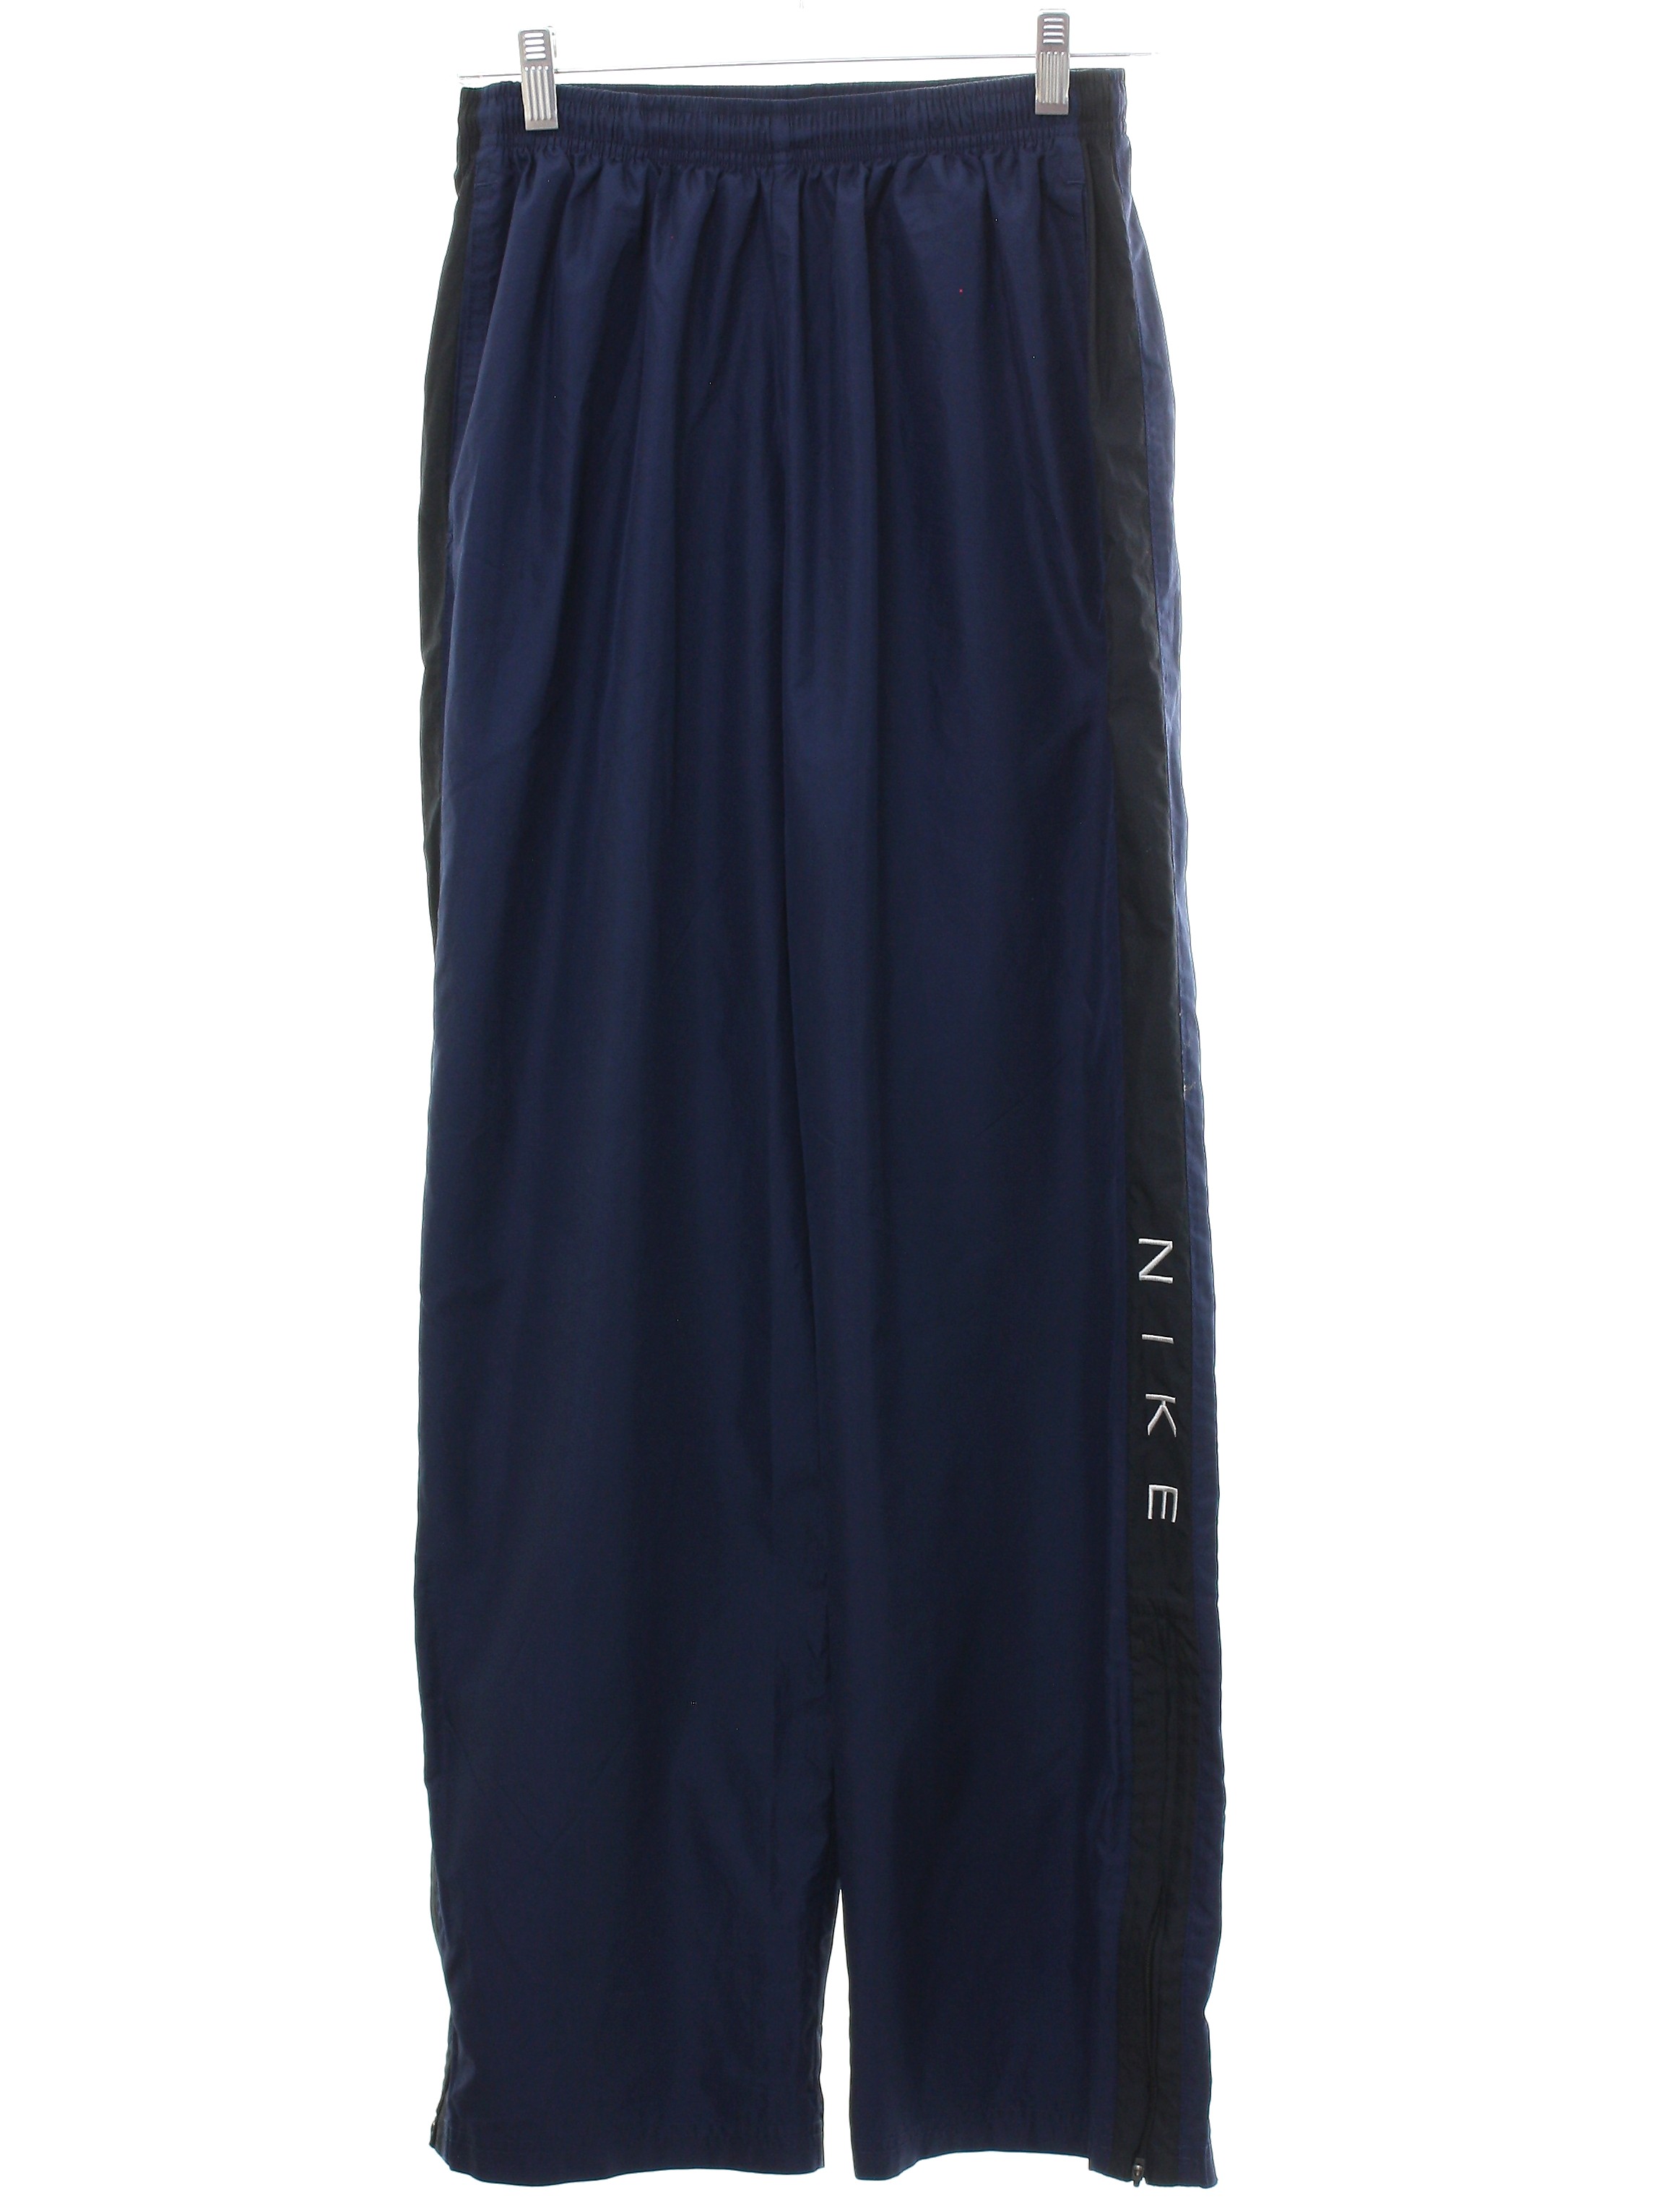 Pants: 90s -Nike- Unisex navy blue background polyester slightly ...